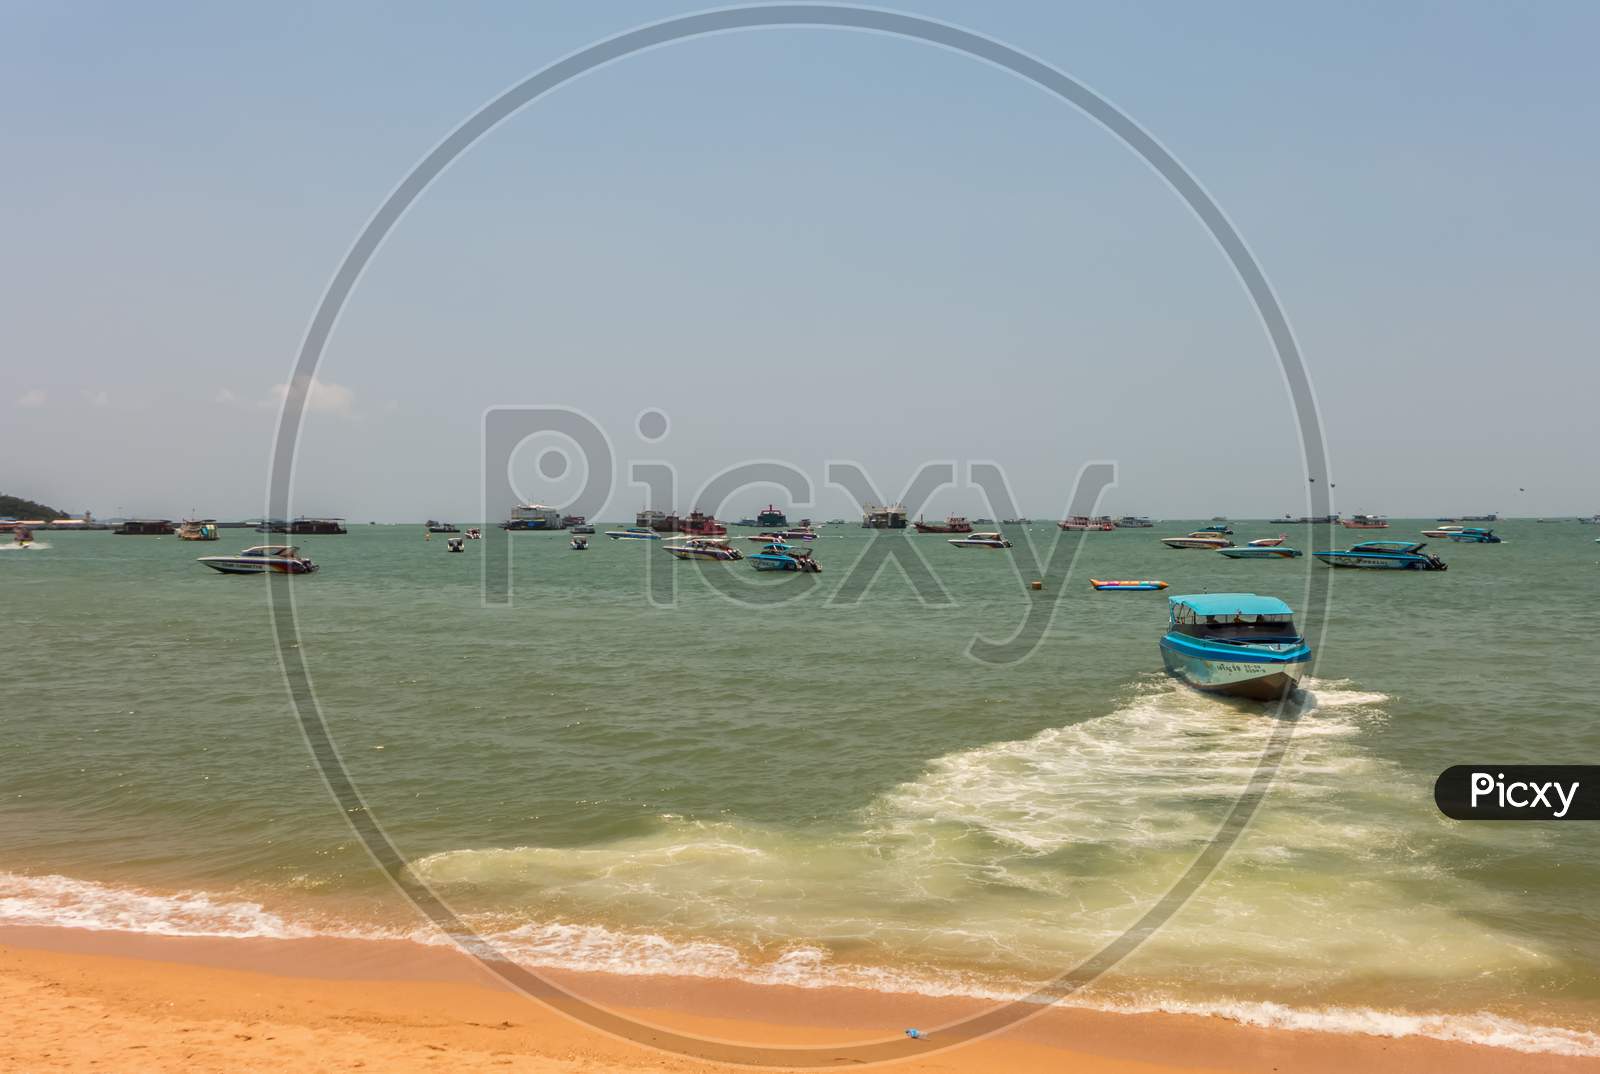 The Beach Of Pattaya With Many Boats